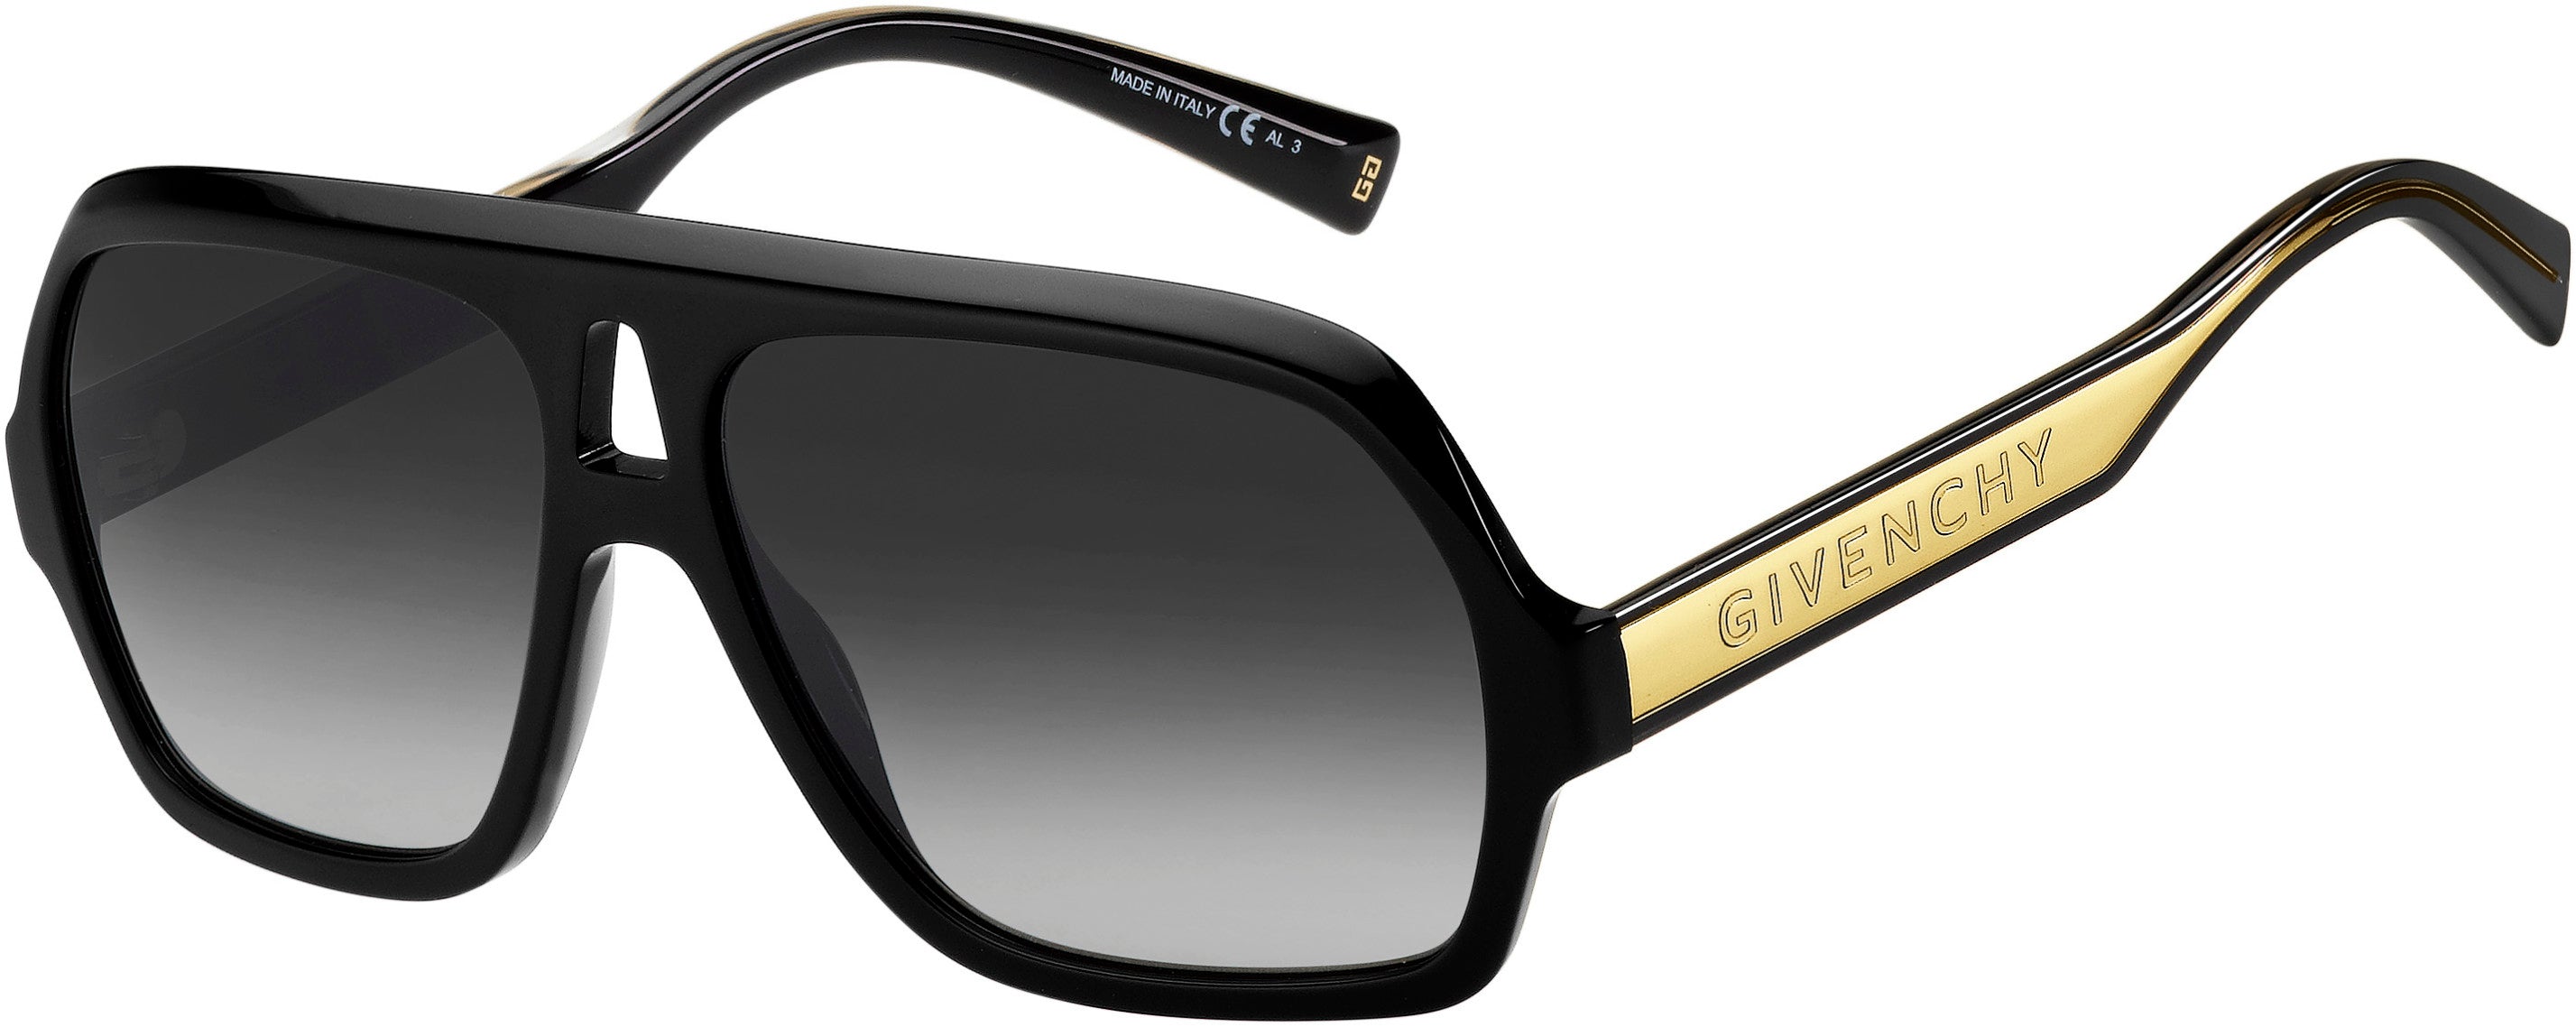  Givenchy 7200/S Navigator Sunglasses 0807-0807  Black (9O Dark Gray Gradient)